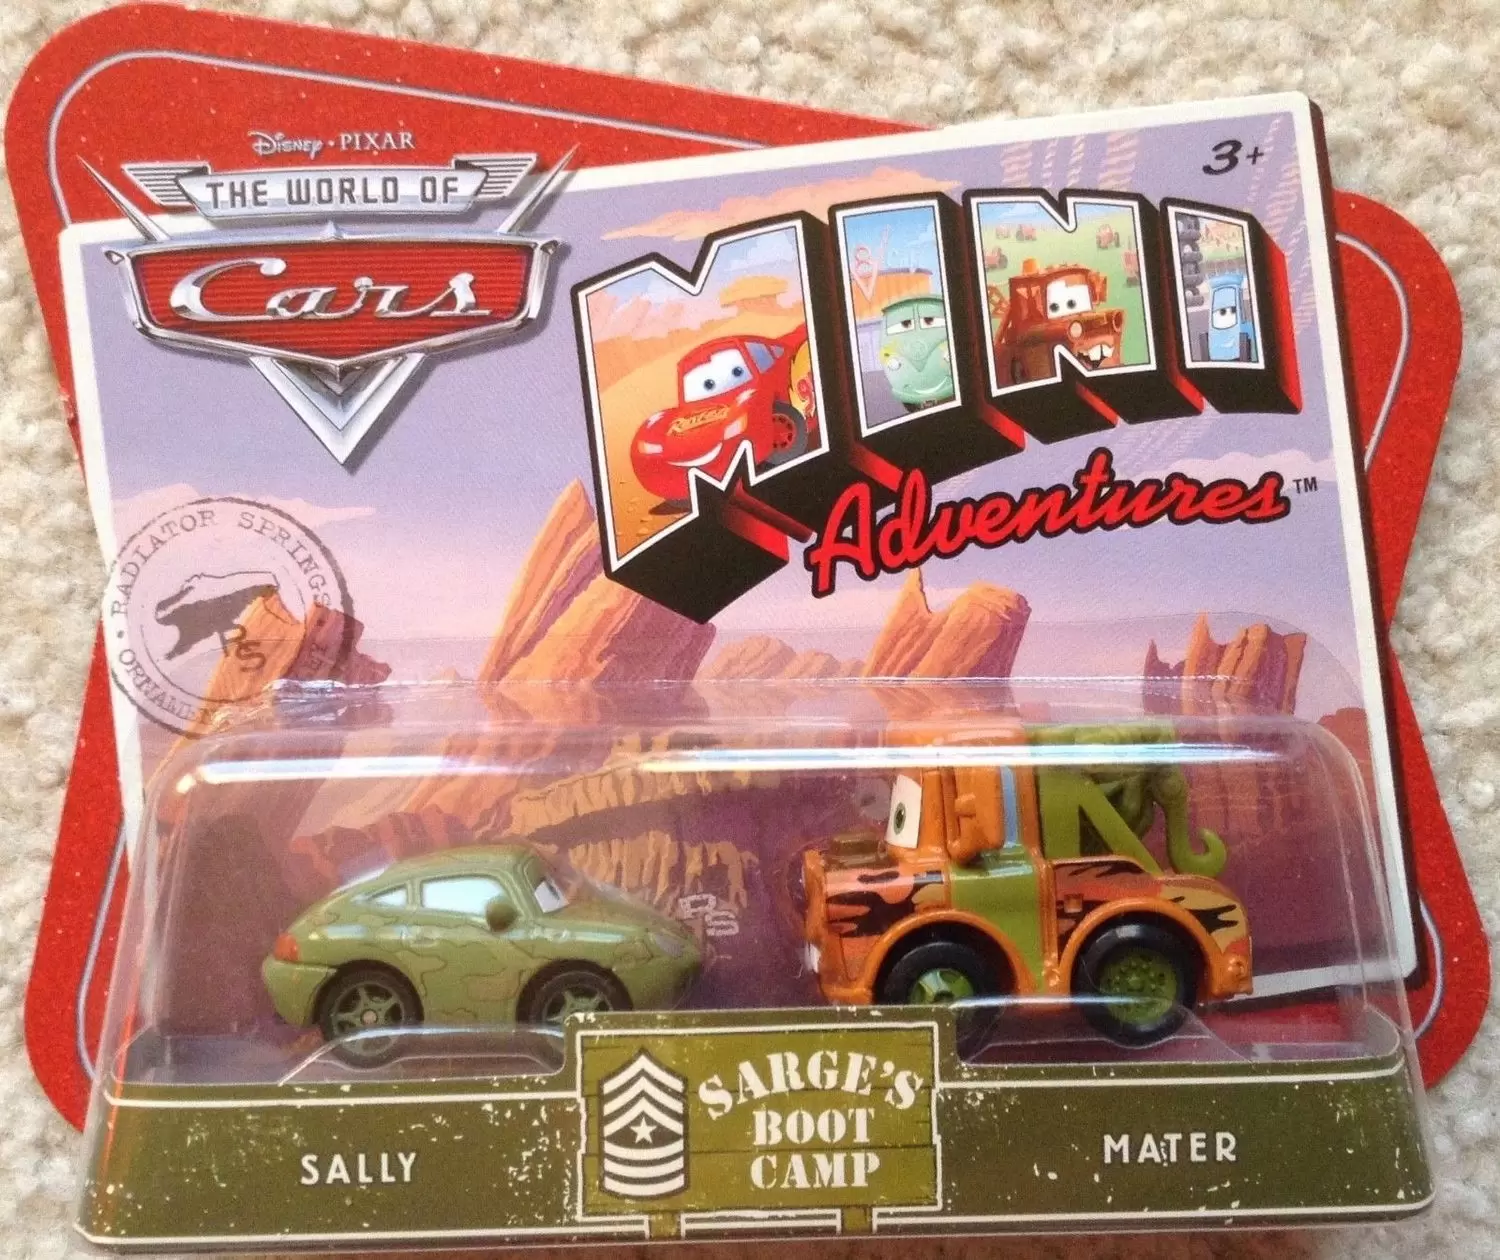 Mini Adventure cars - Sarge’s Boot Camp - Sally & Mater